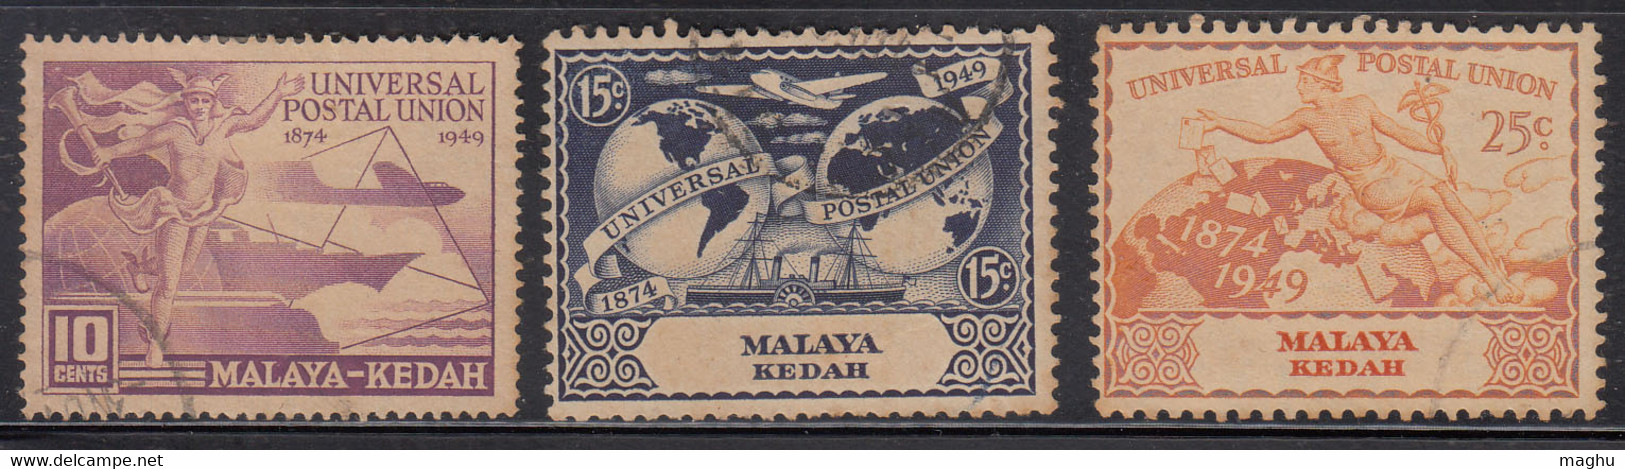 3v Kedah Used 1949, UPU. U.P.U., Universal Postal Union, Airplane, Ship, Globe, Malaya / Malaysia - Kedah